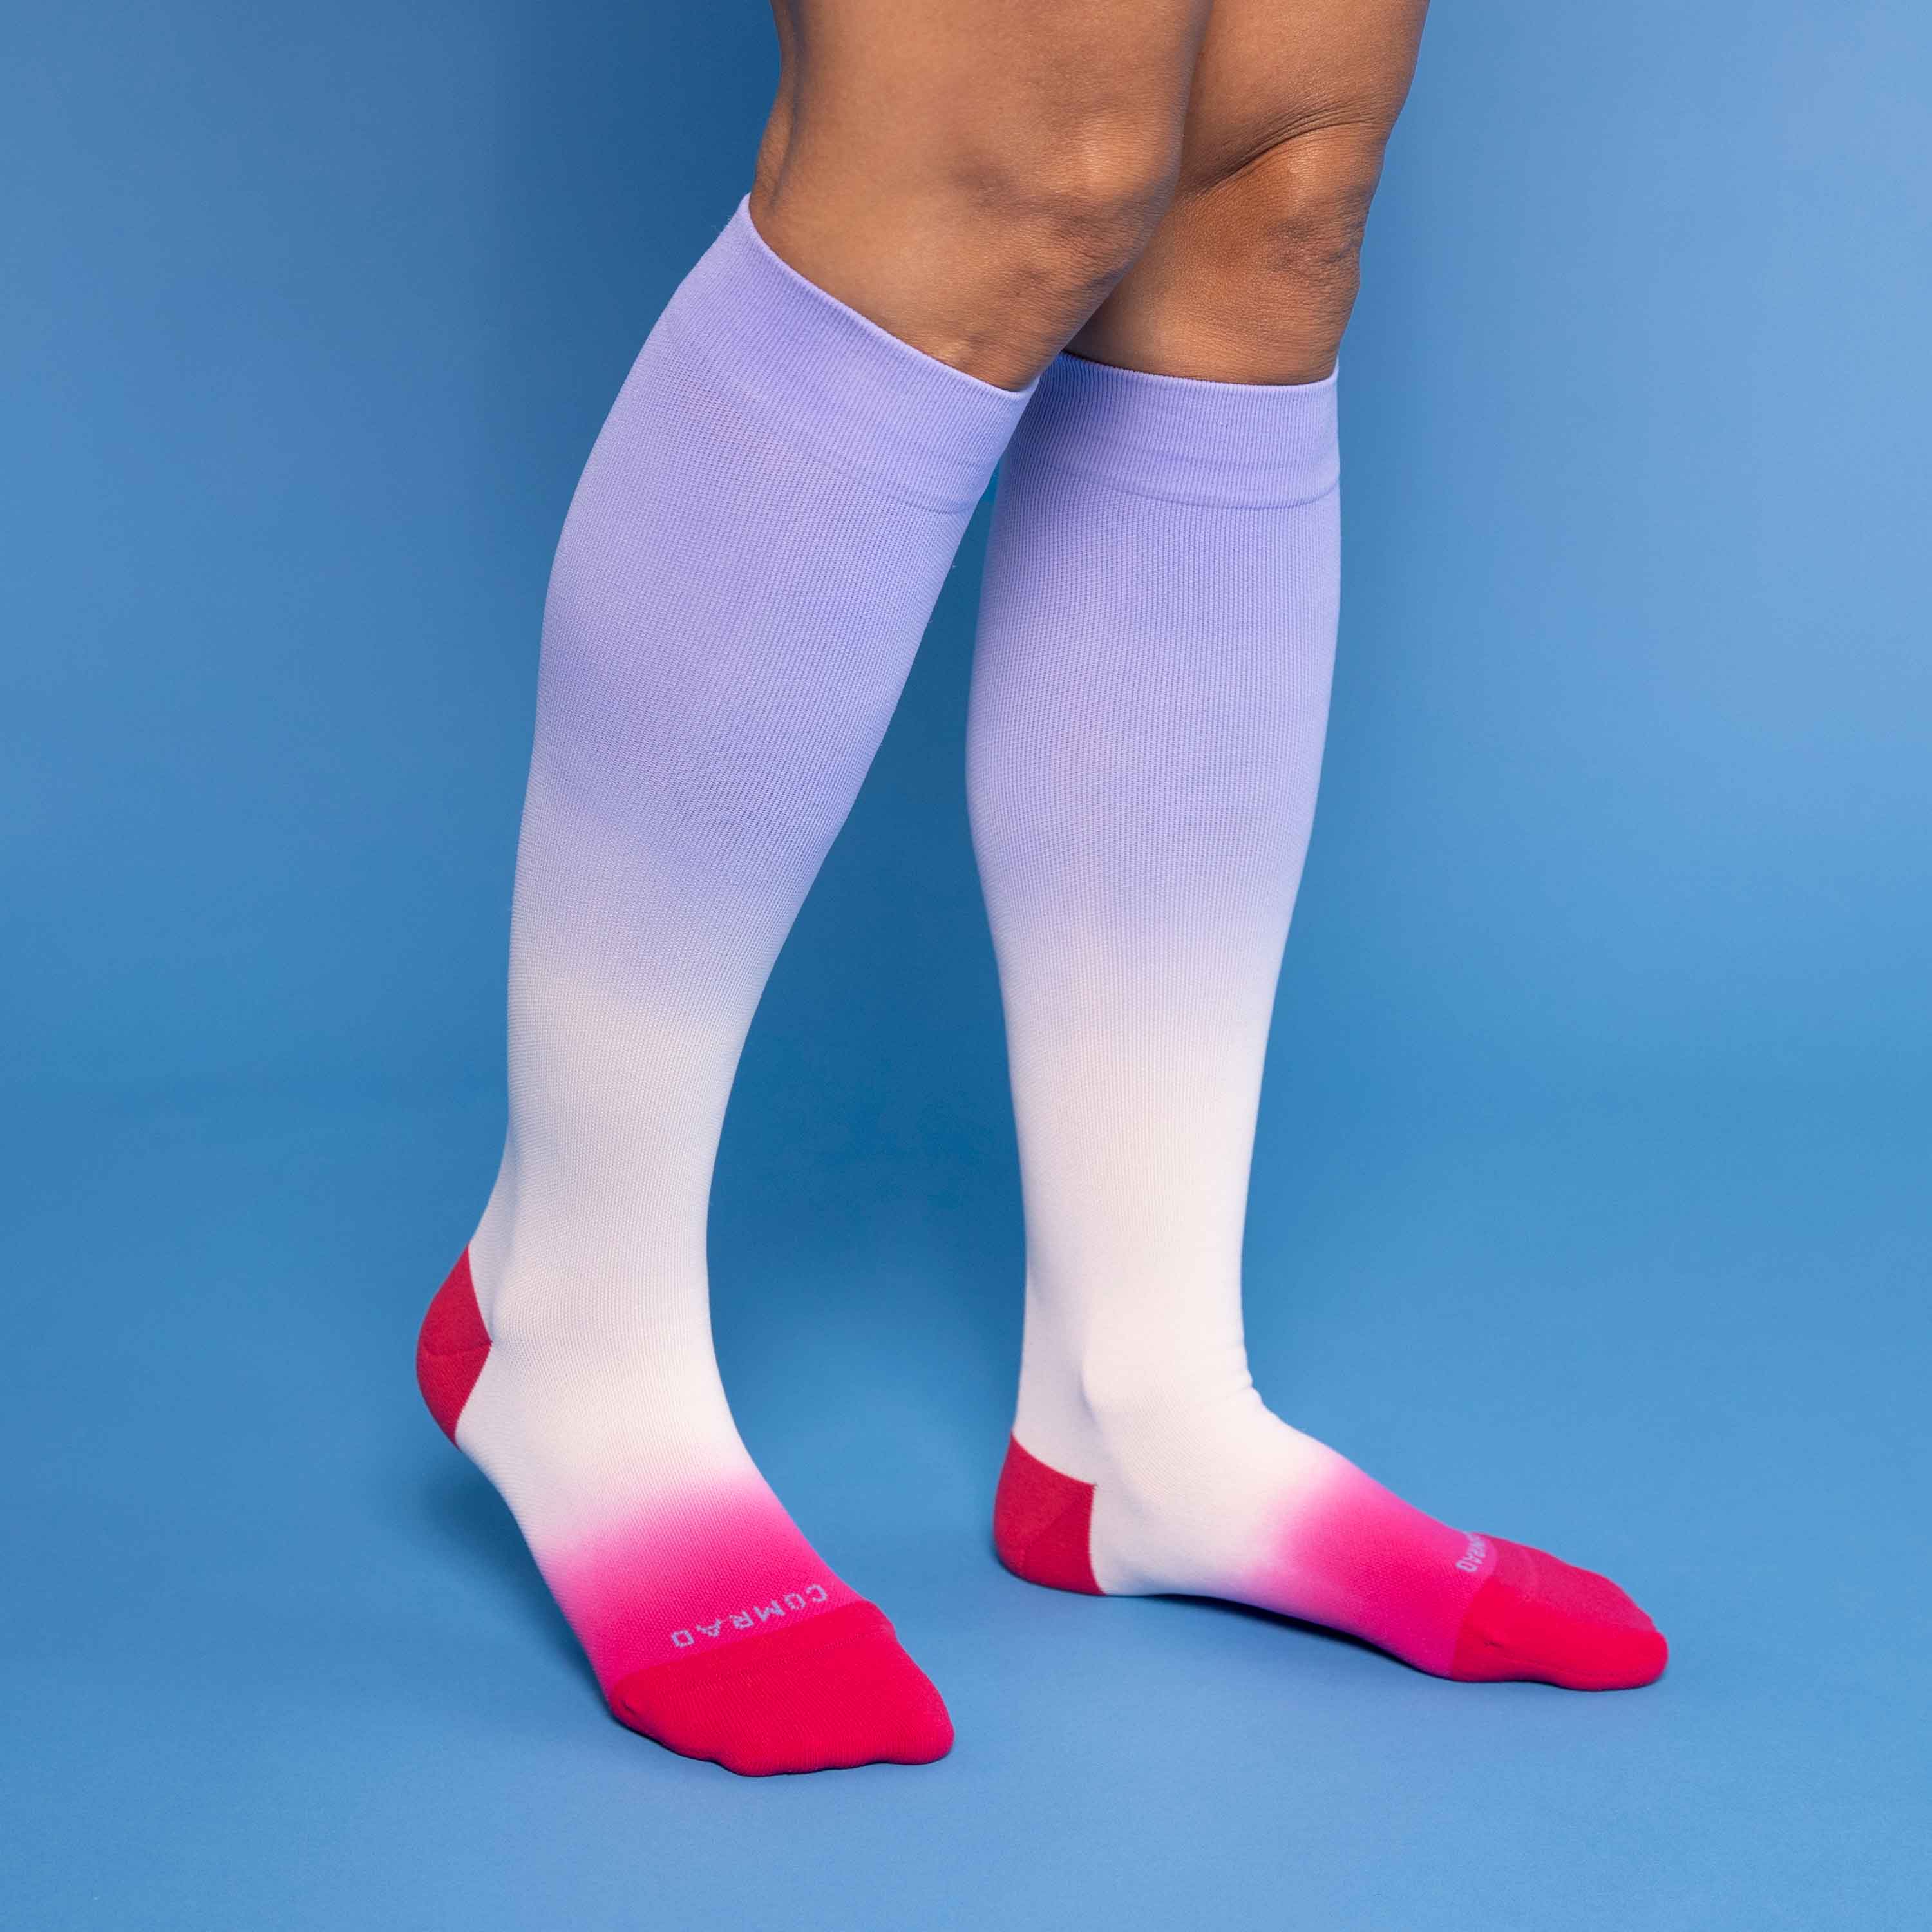 Comrad Compression Socks Review 2020 - Best Compression Socks